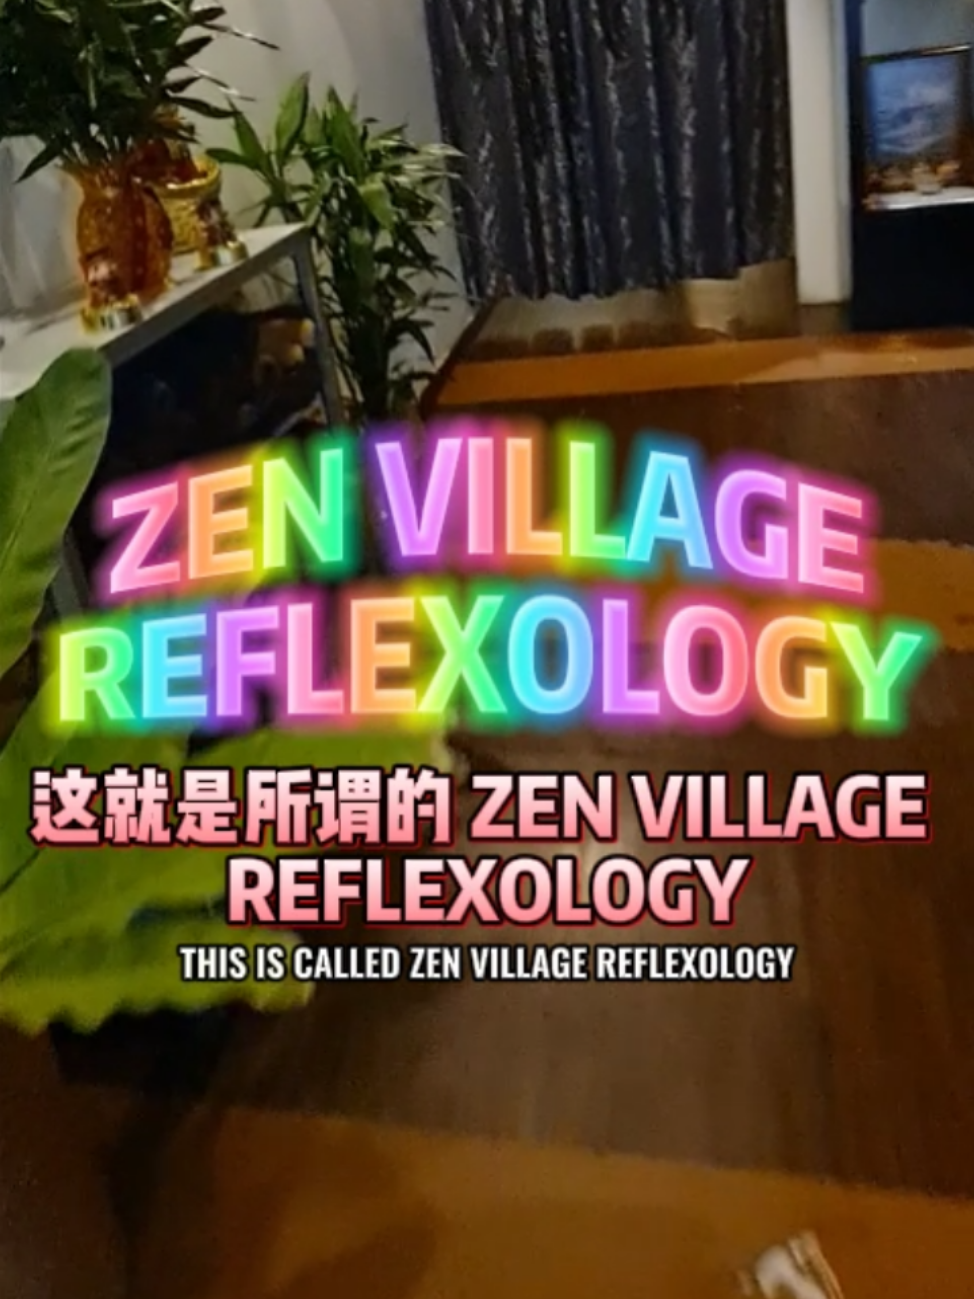 Zen Village Reflexology Holiday Plaza JB 's images